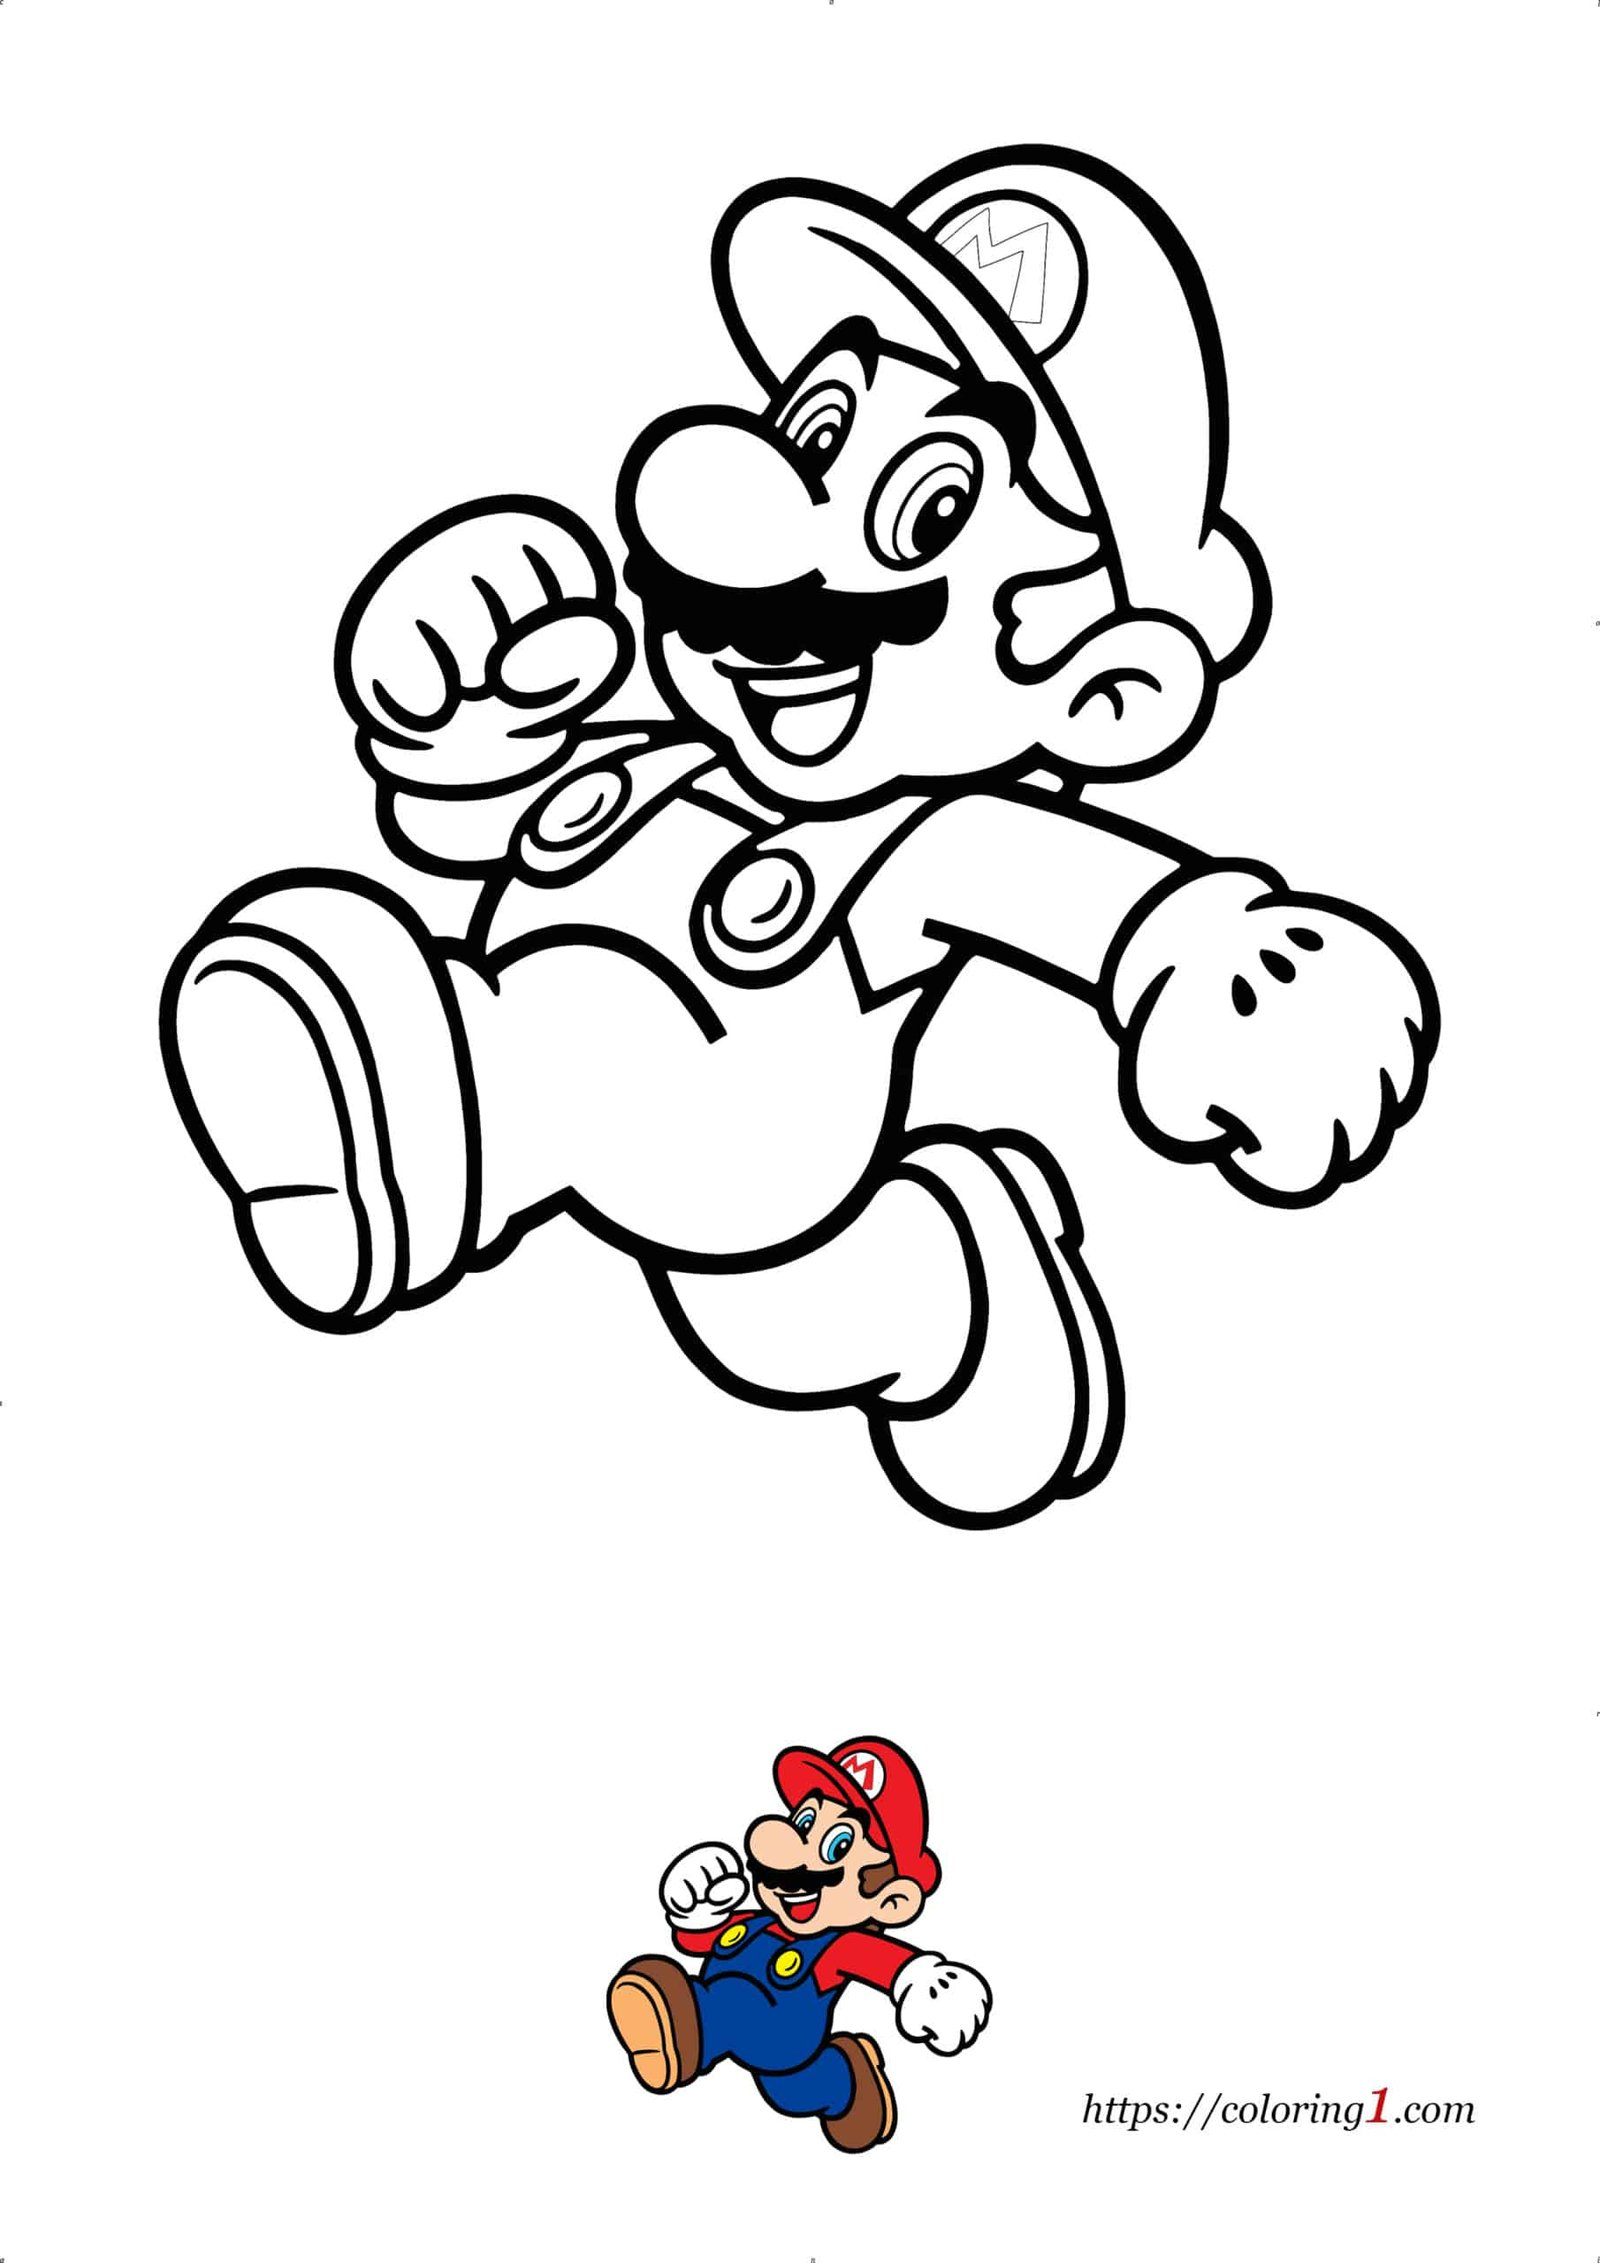 Coloriage Super Mario - Coloriage Gratuit À Imprimer Dessin 2021 destiné Dessin Mario A Imprimer